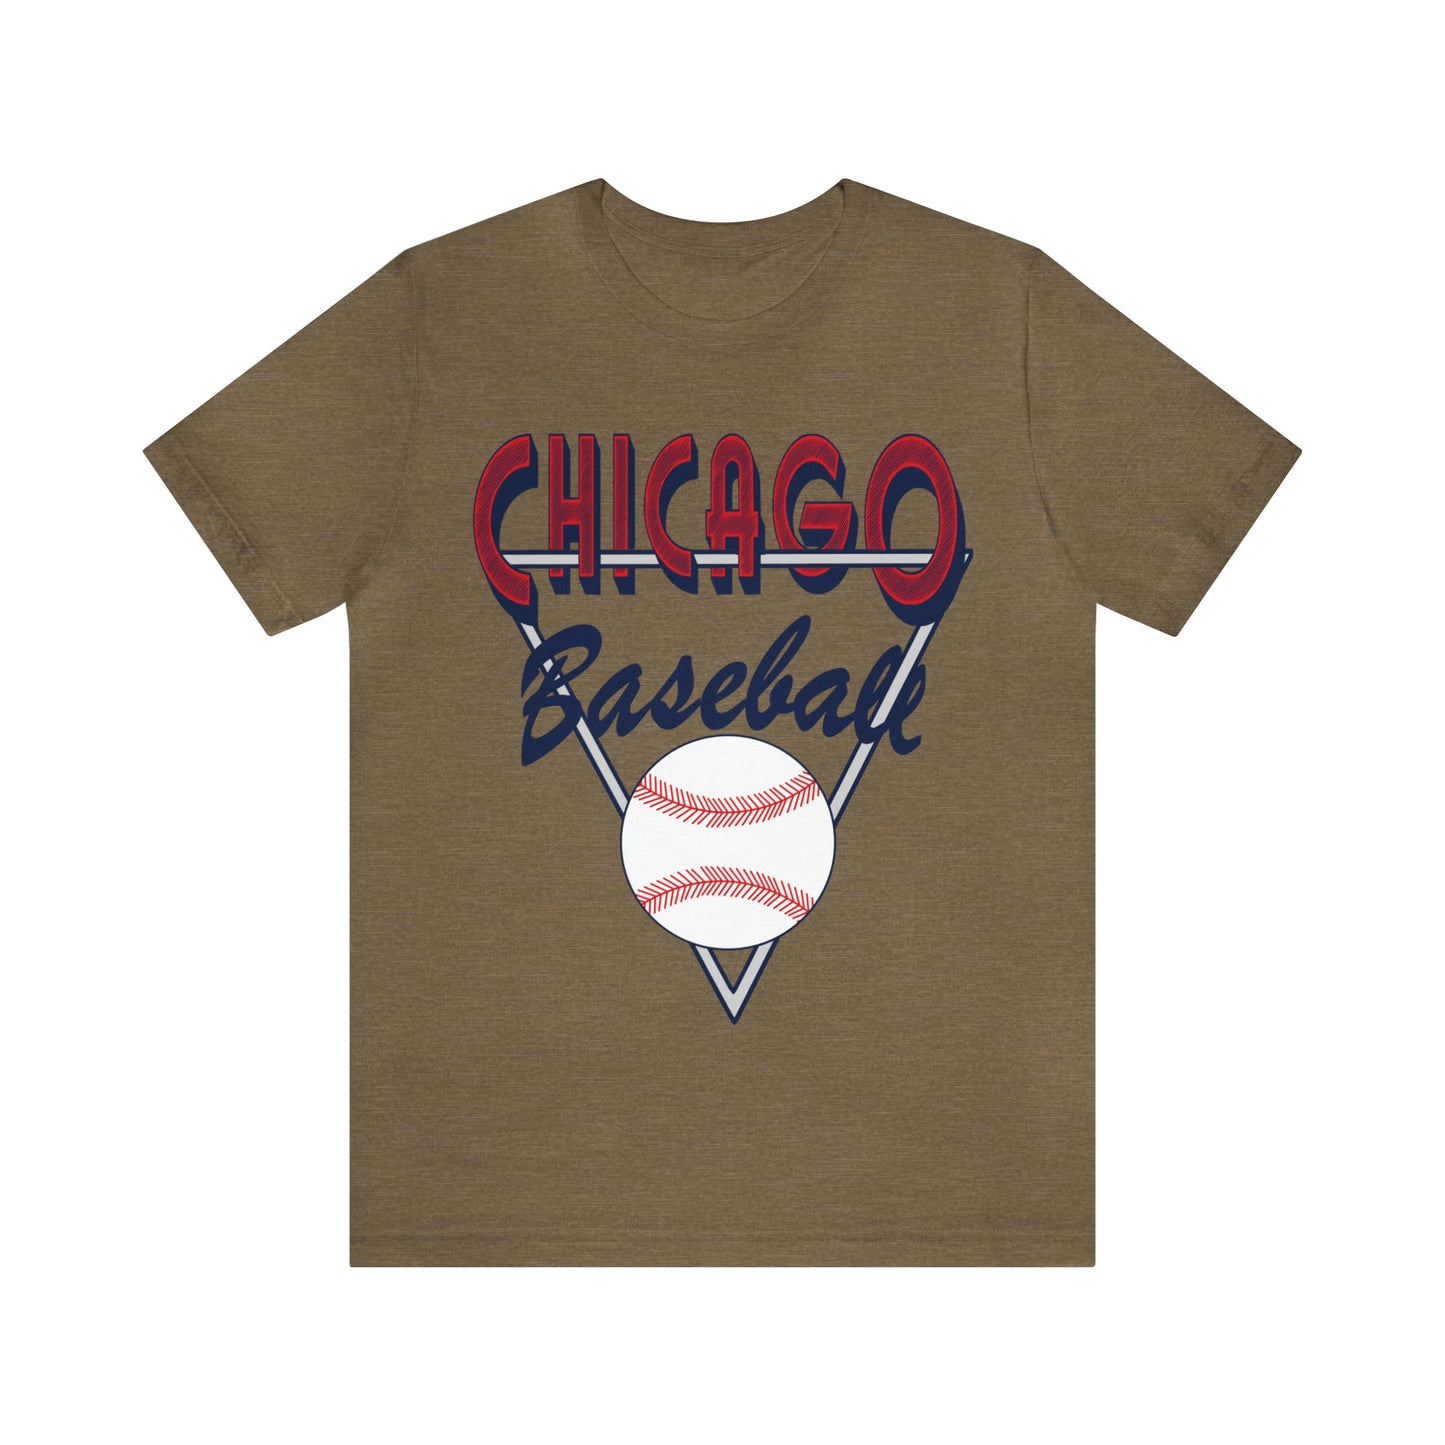 Retro Chicago Baseball Tee - Vintage Unisex Short Sleeve T-Shirt